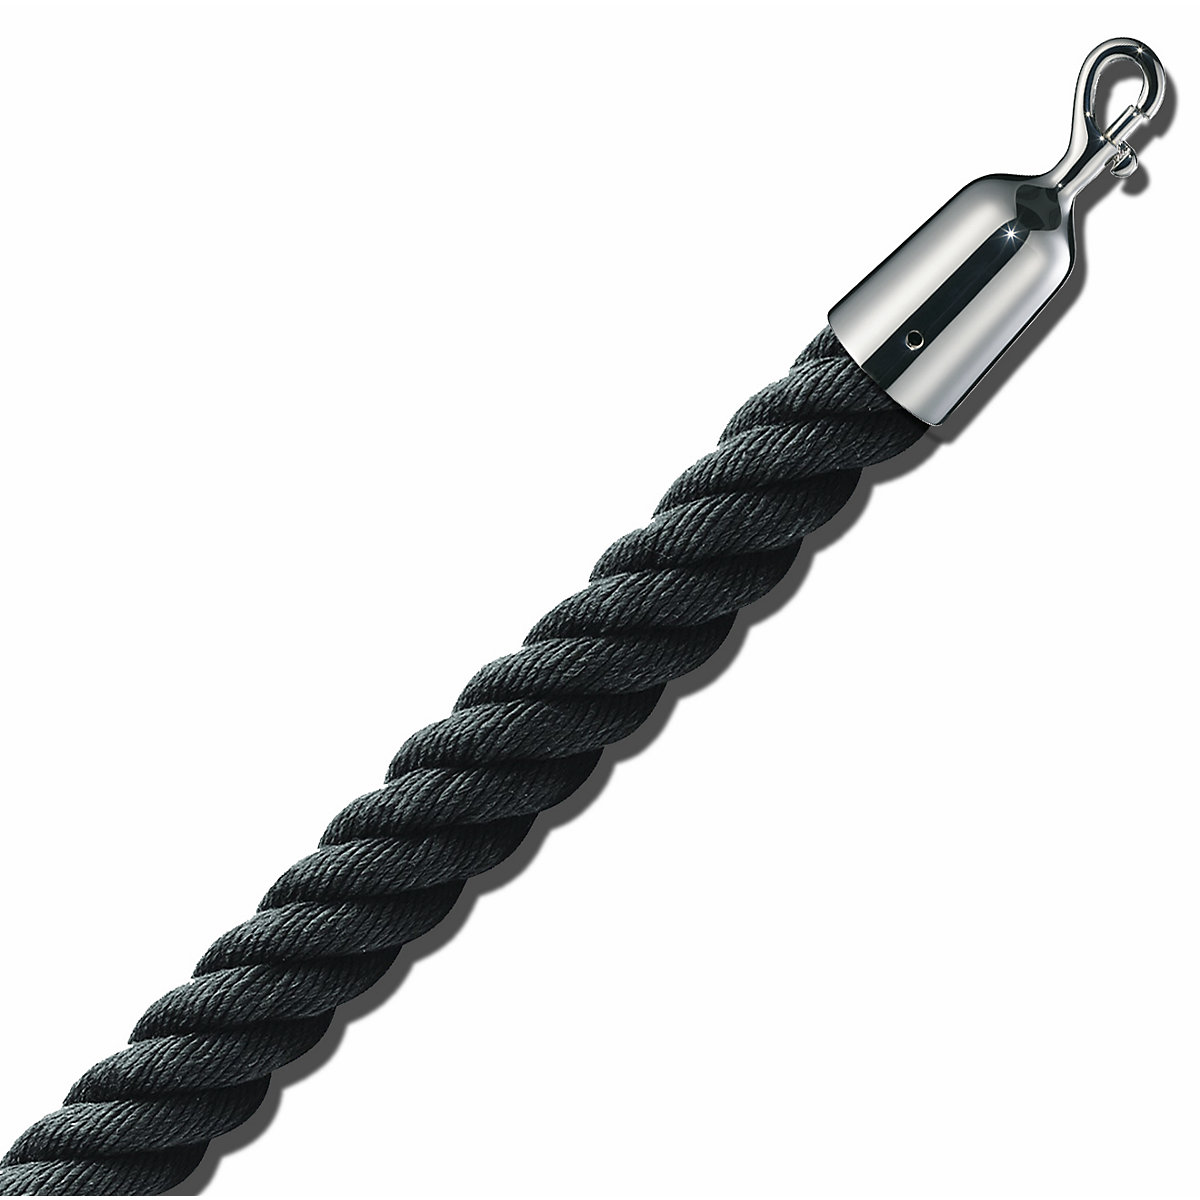 Barrier cord 1.5 m, chrome end caps, black cord-4